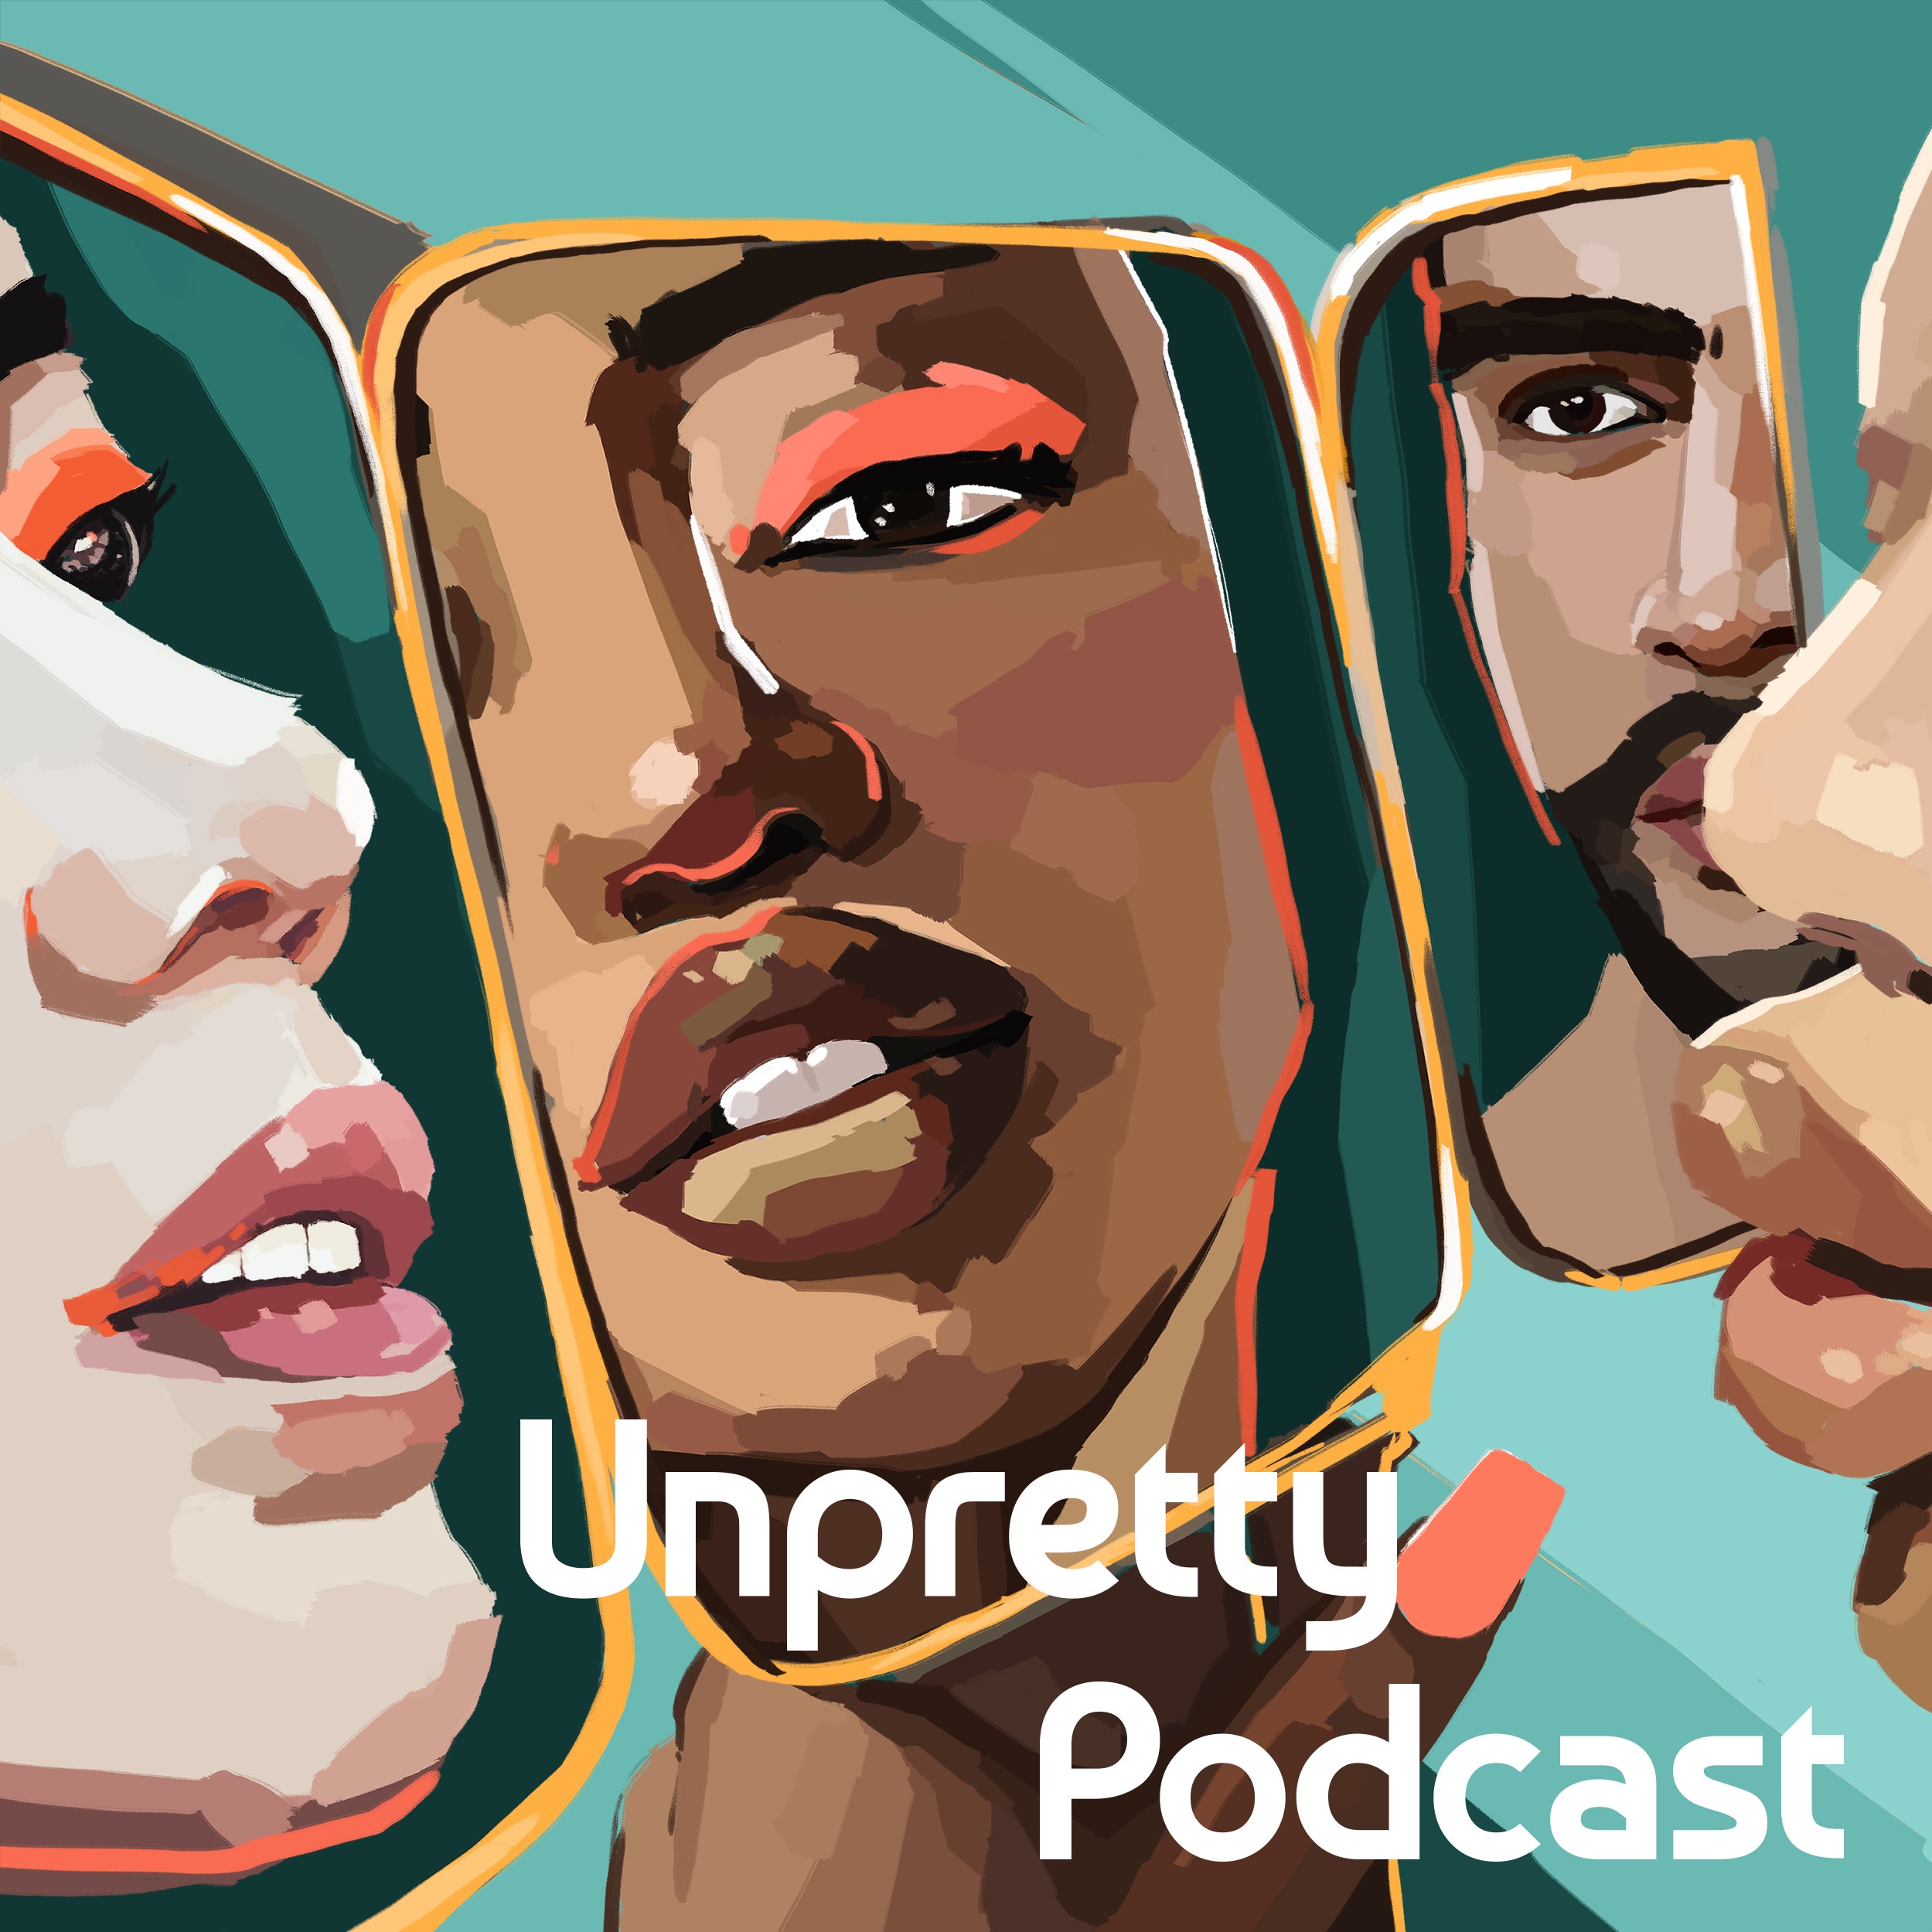 Unpretty Podcast podcast show image